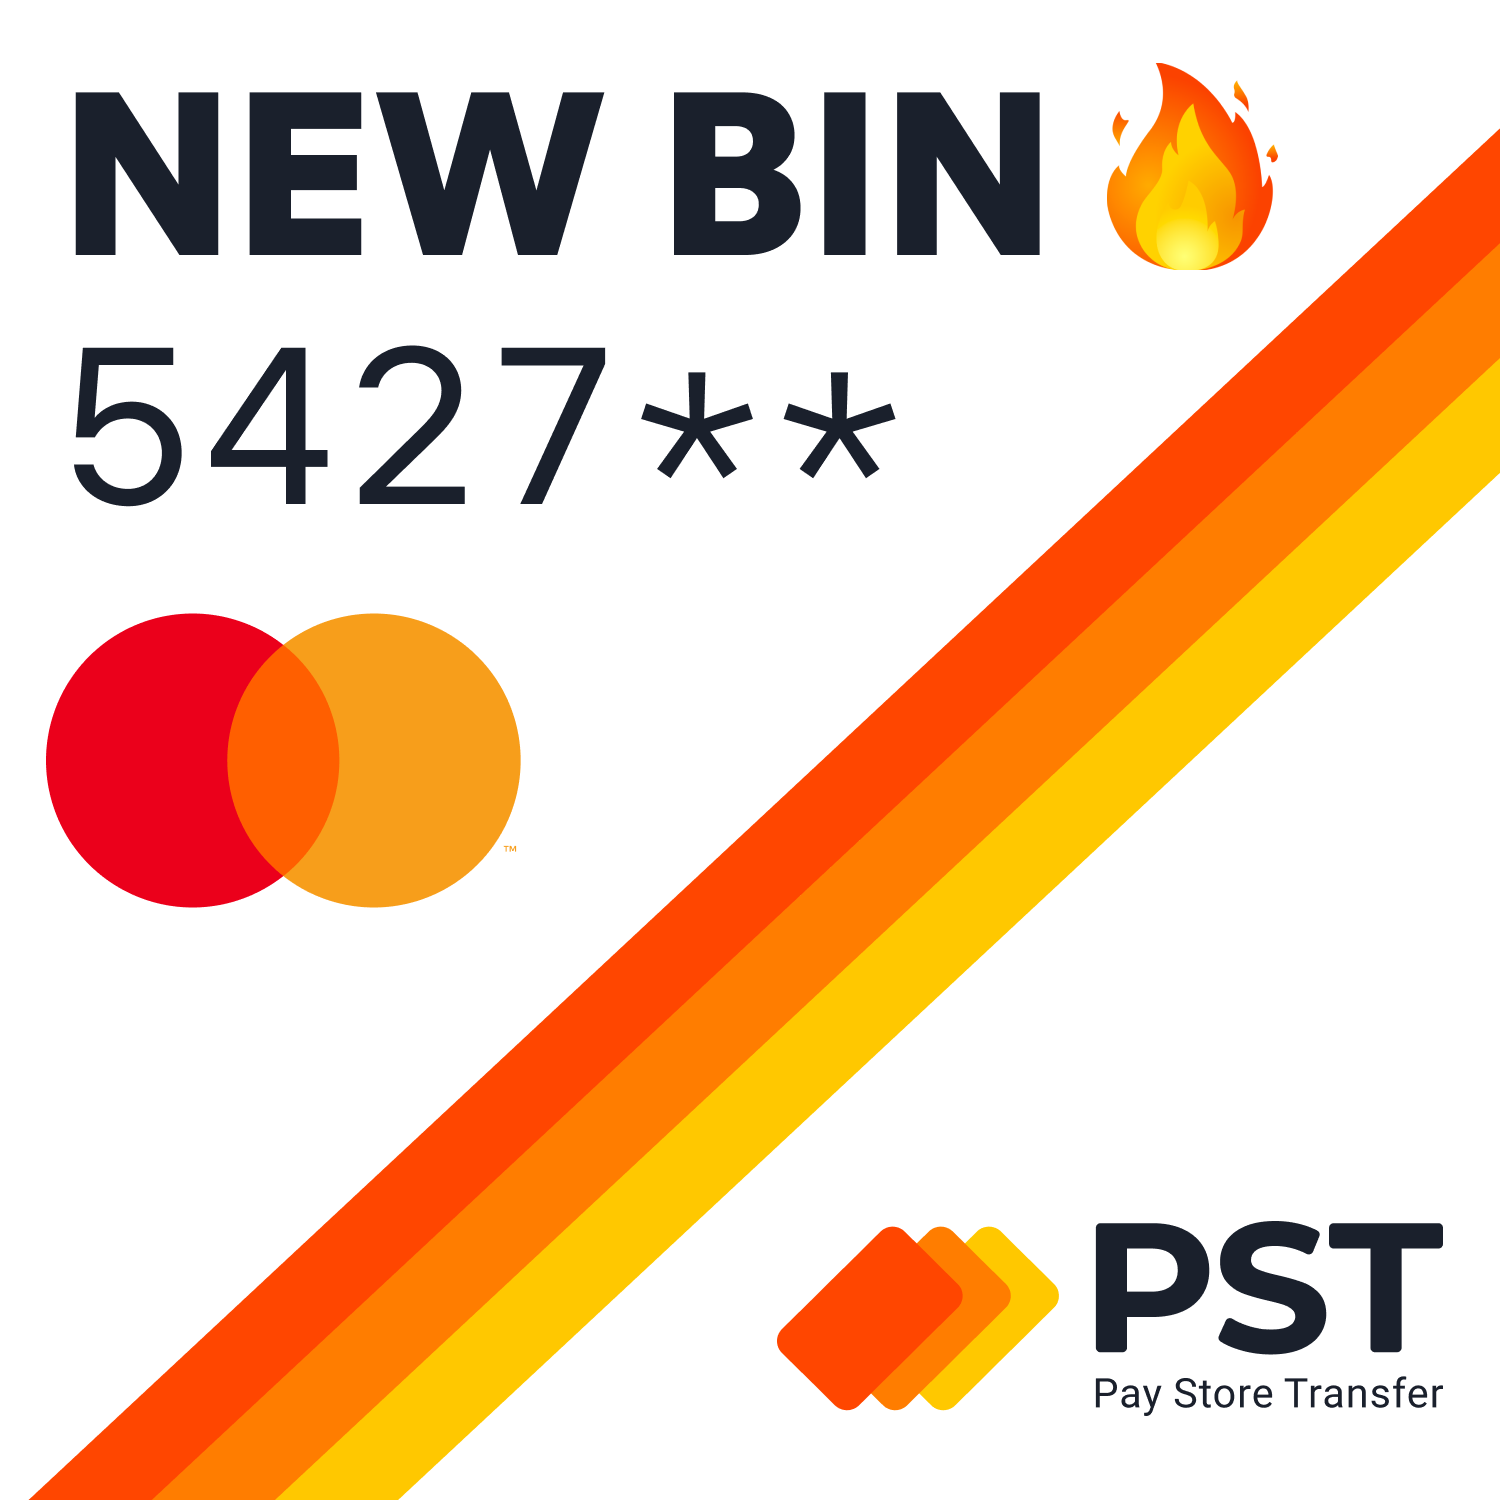 New BIN 5247**